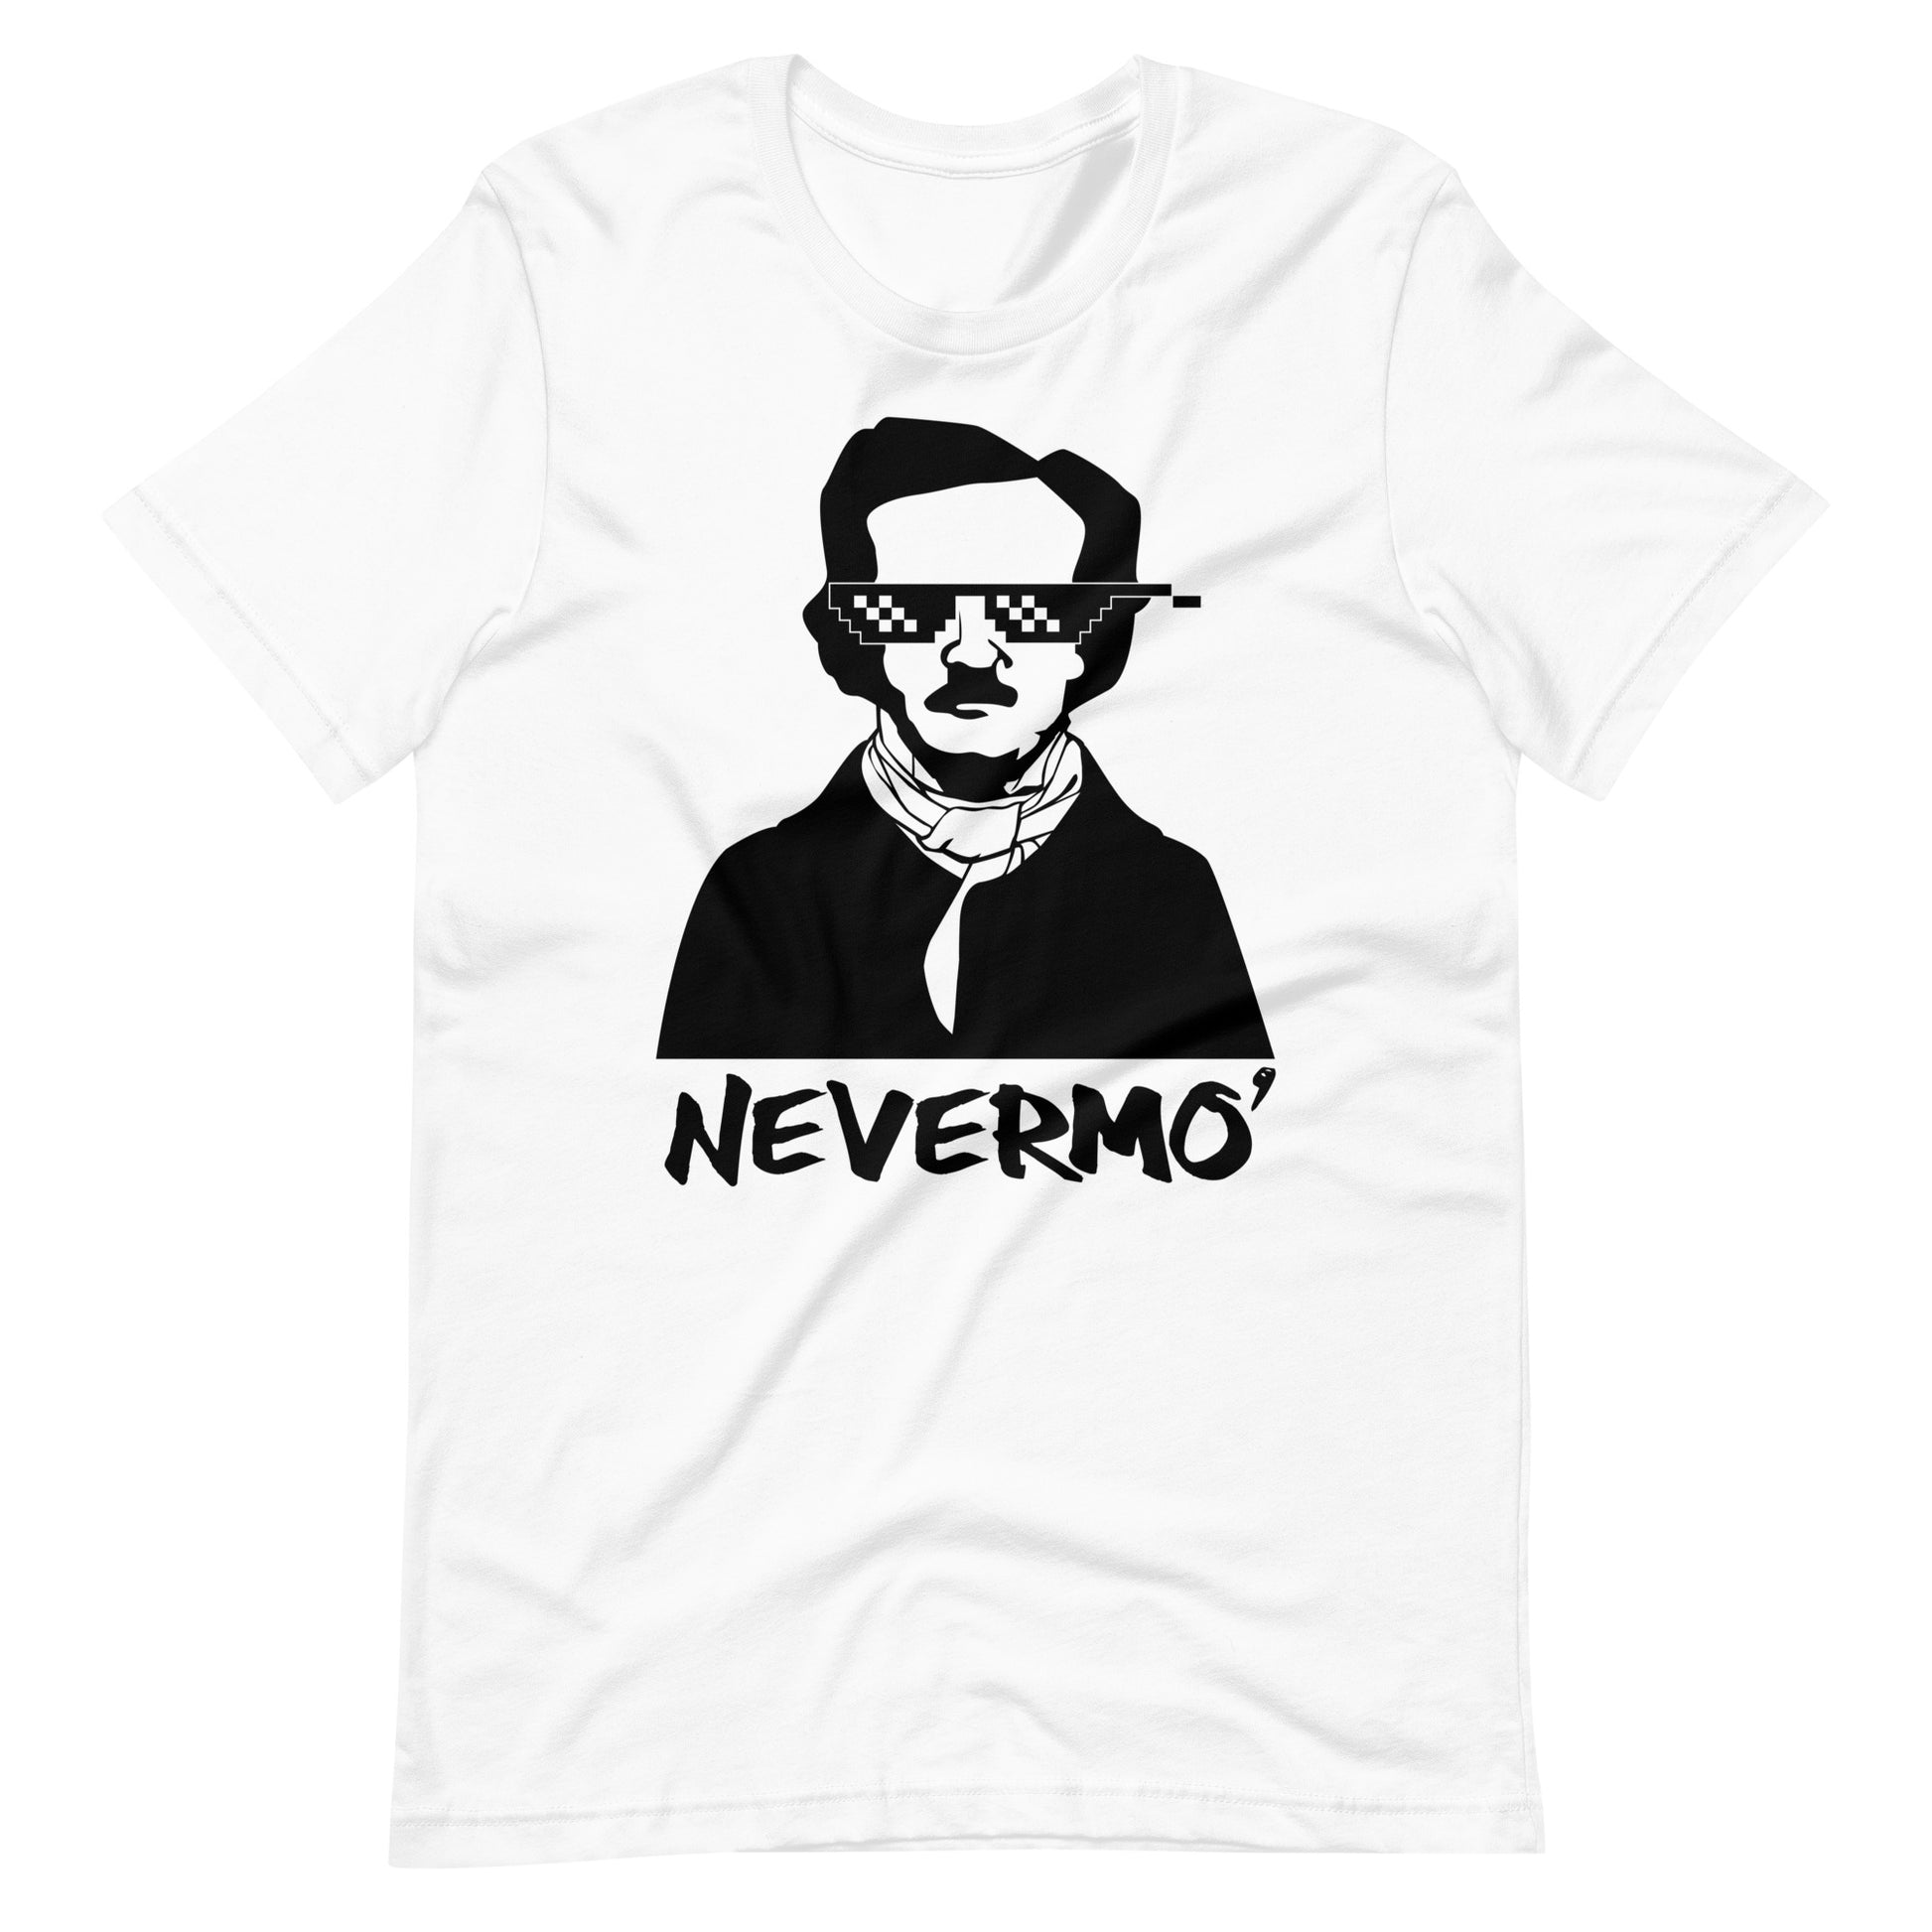 Women's Edgar Allan Poe "Nevermo" t-shirt - White Front